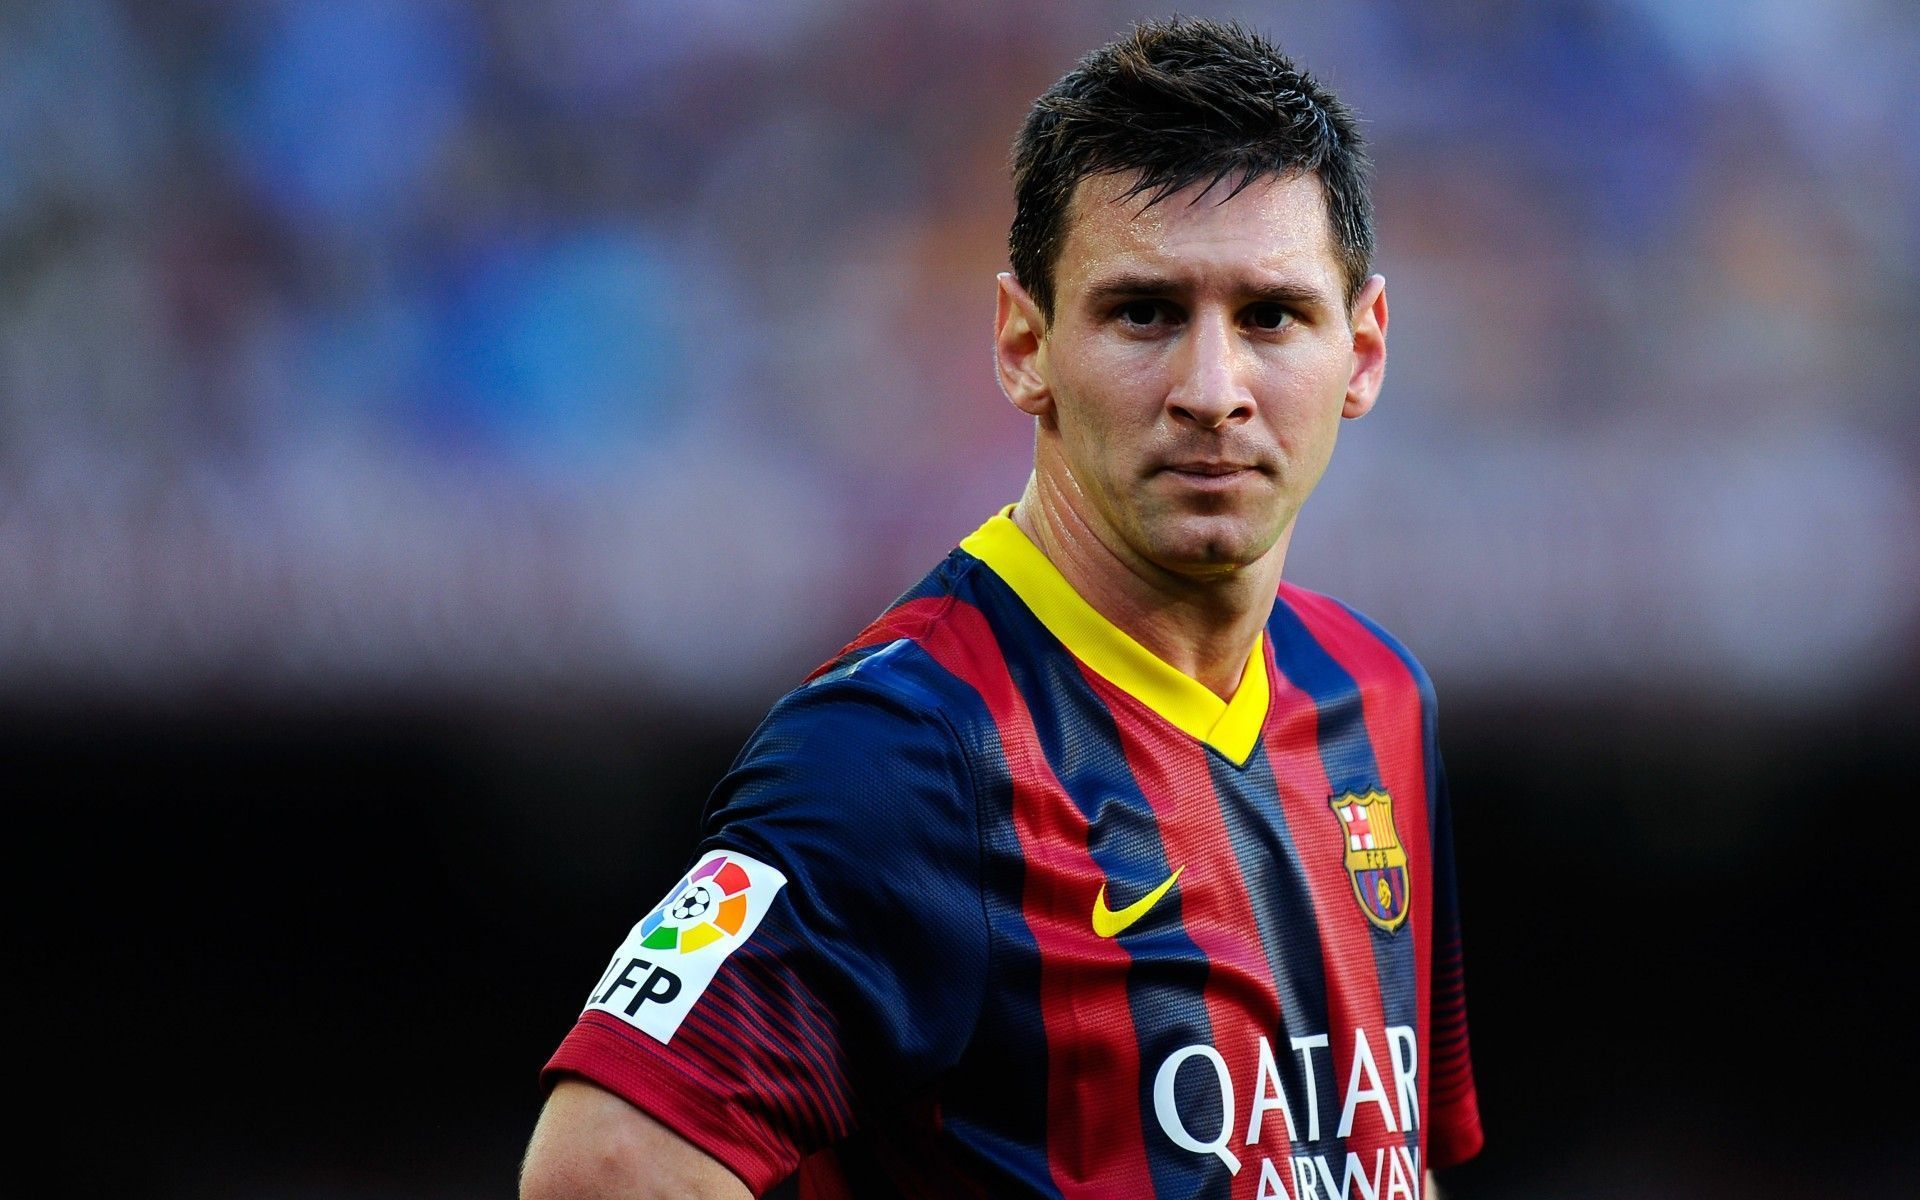 Lionel-Messi-wallpapers.jpg